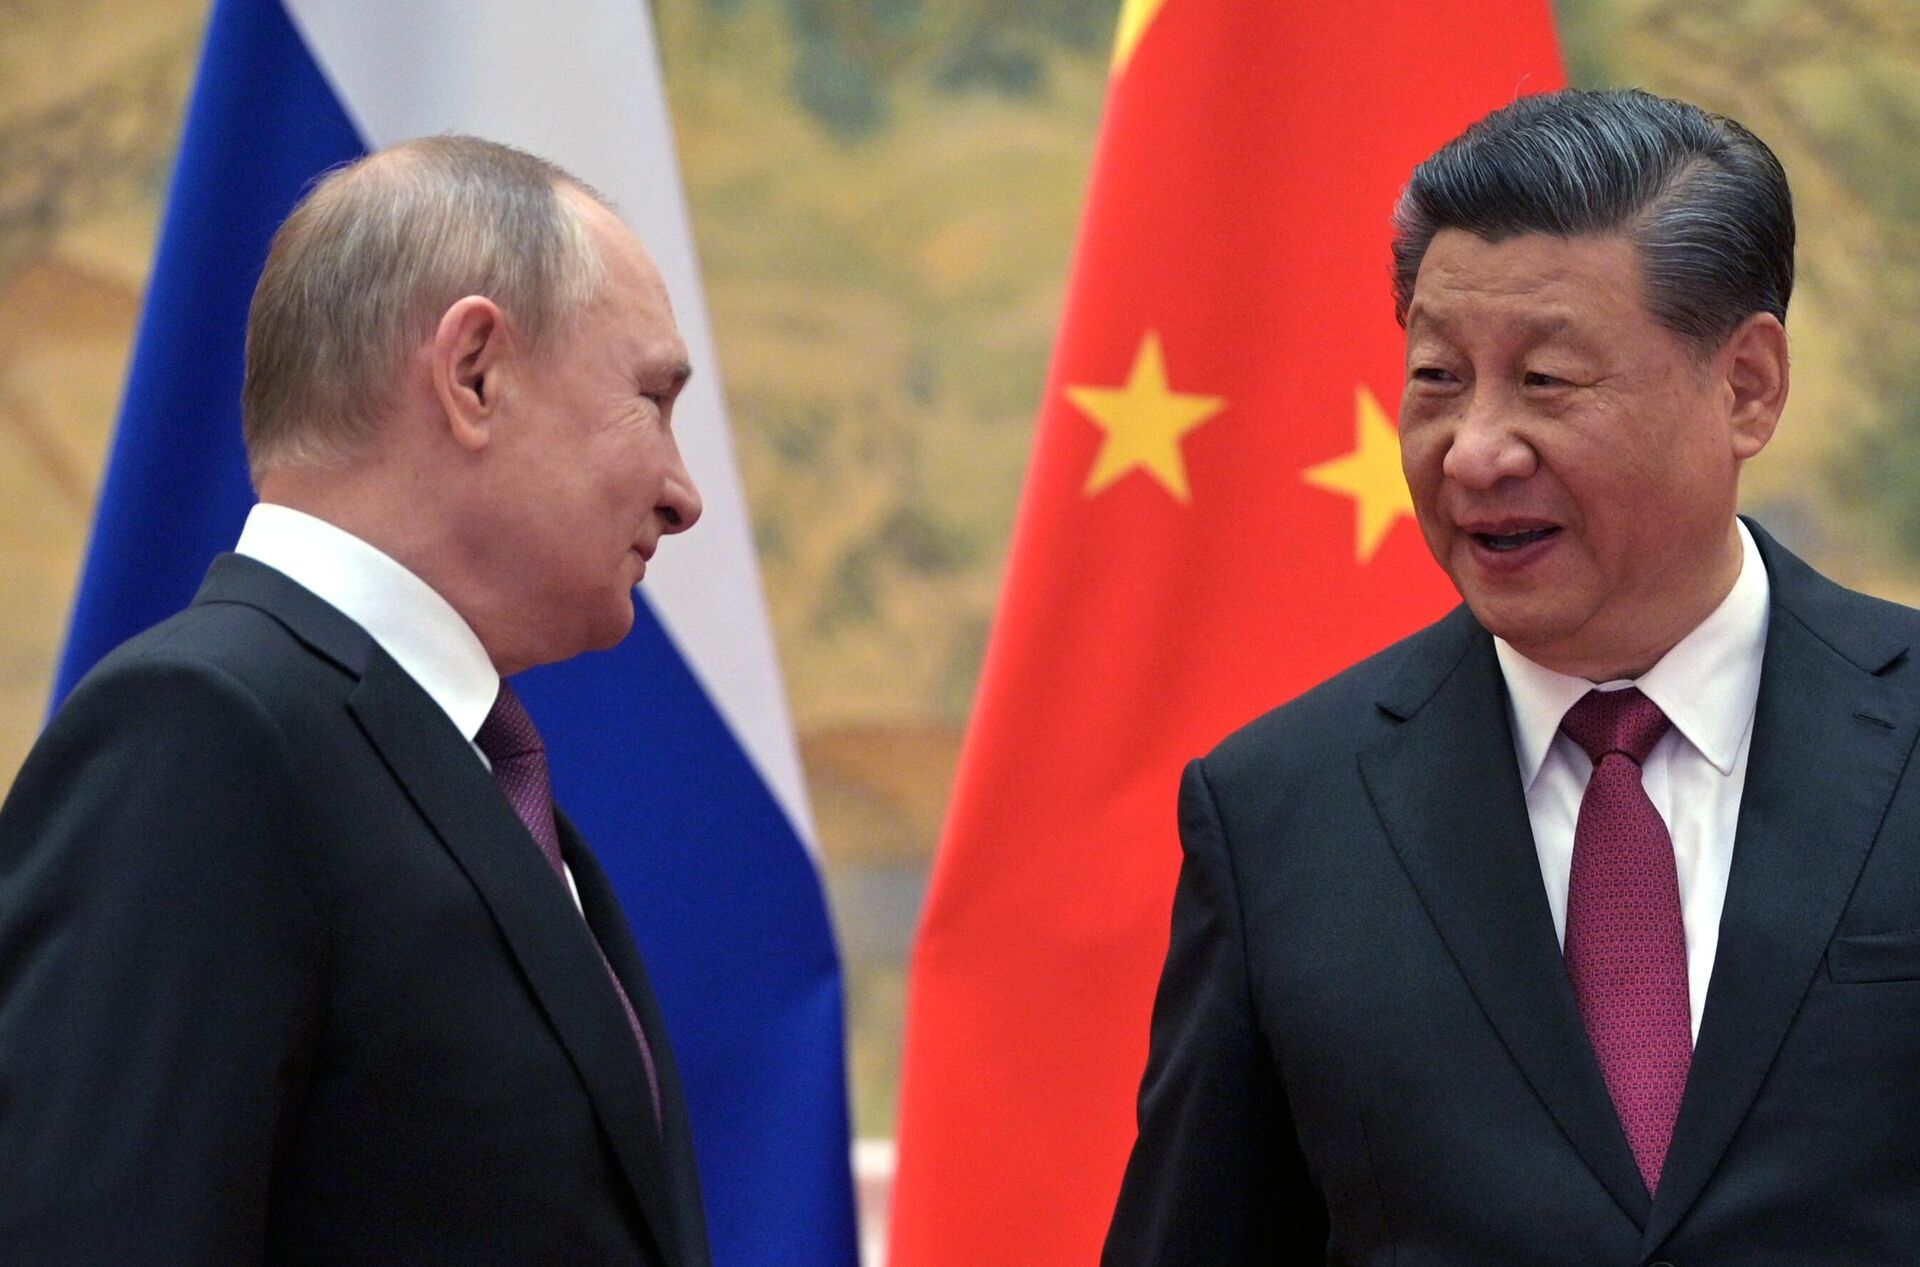 Russian President Vladimir Putin, left, and Chinese President Xi Jinping pose during their meeting at the Diaoyutai State Guesthouse in Beijing, China. - Sputnik International, 1920, 09.02.2022